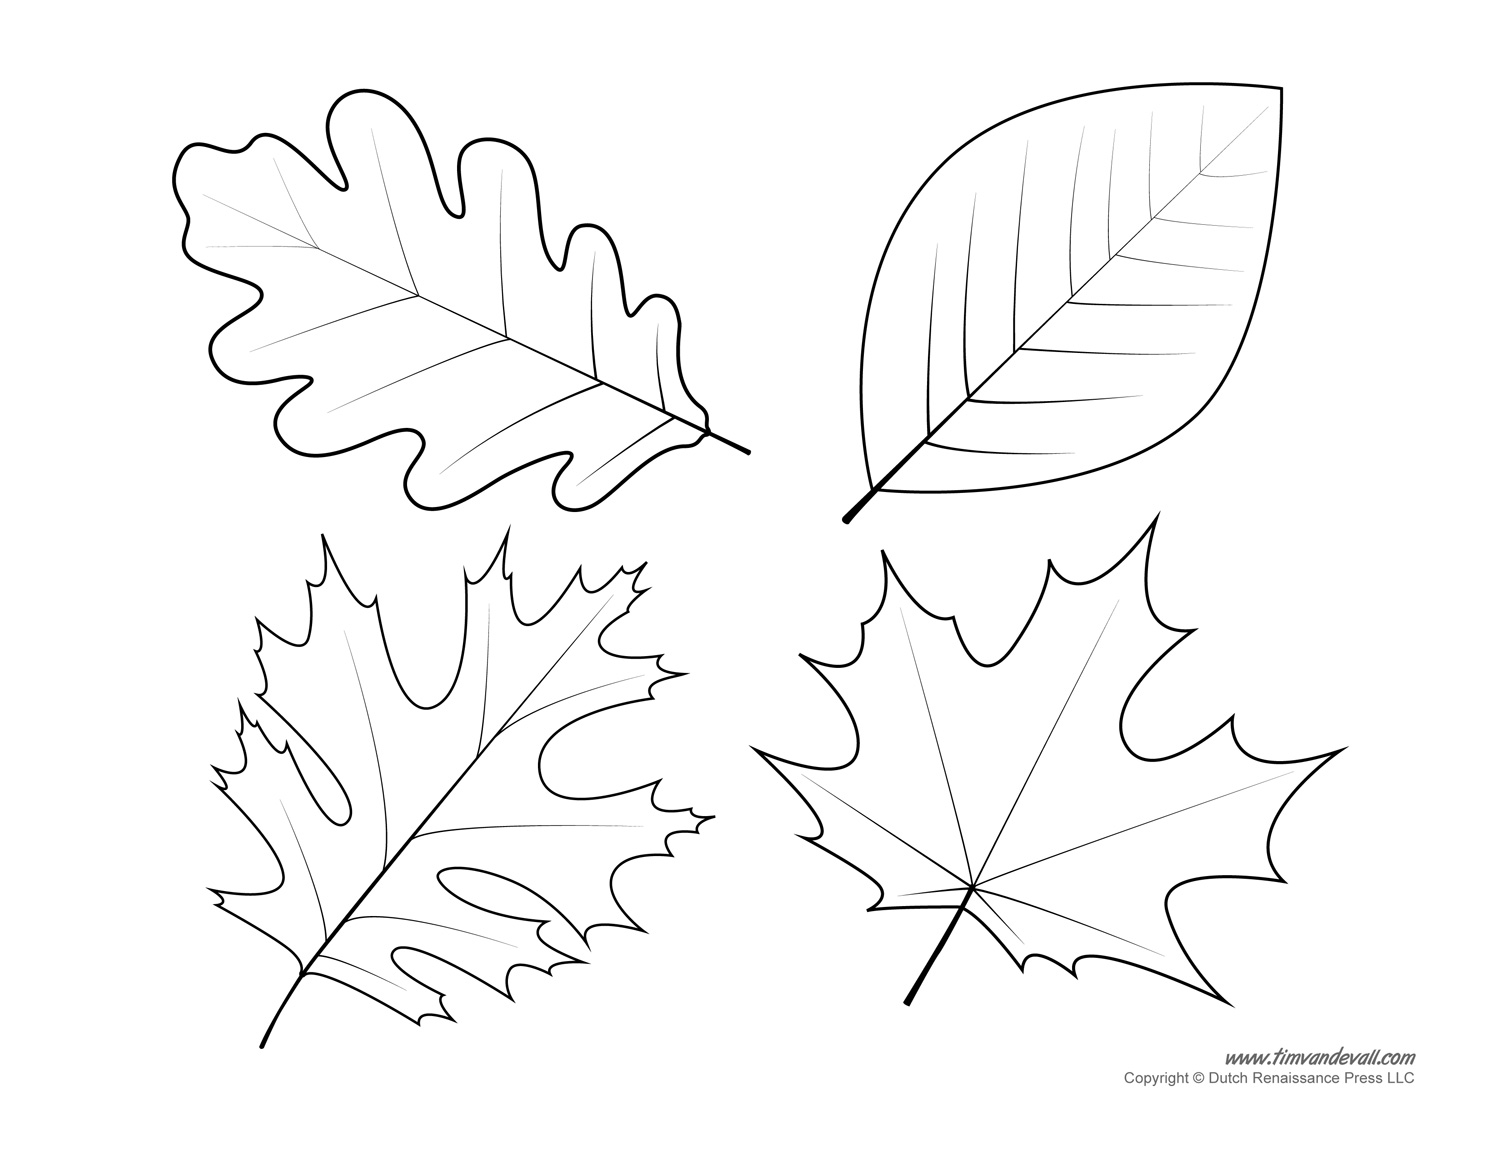 magnolia-leaf-drawing-at-getdrawings-free-download